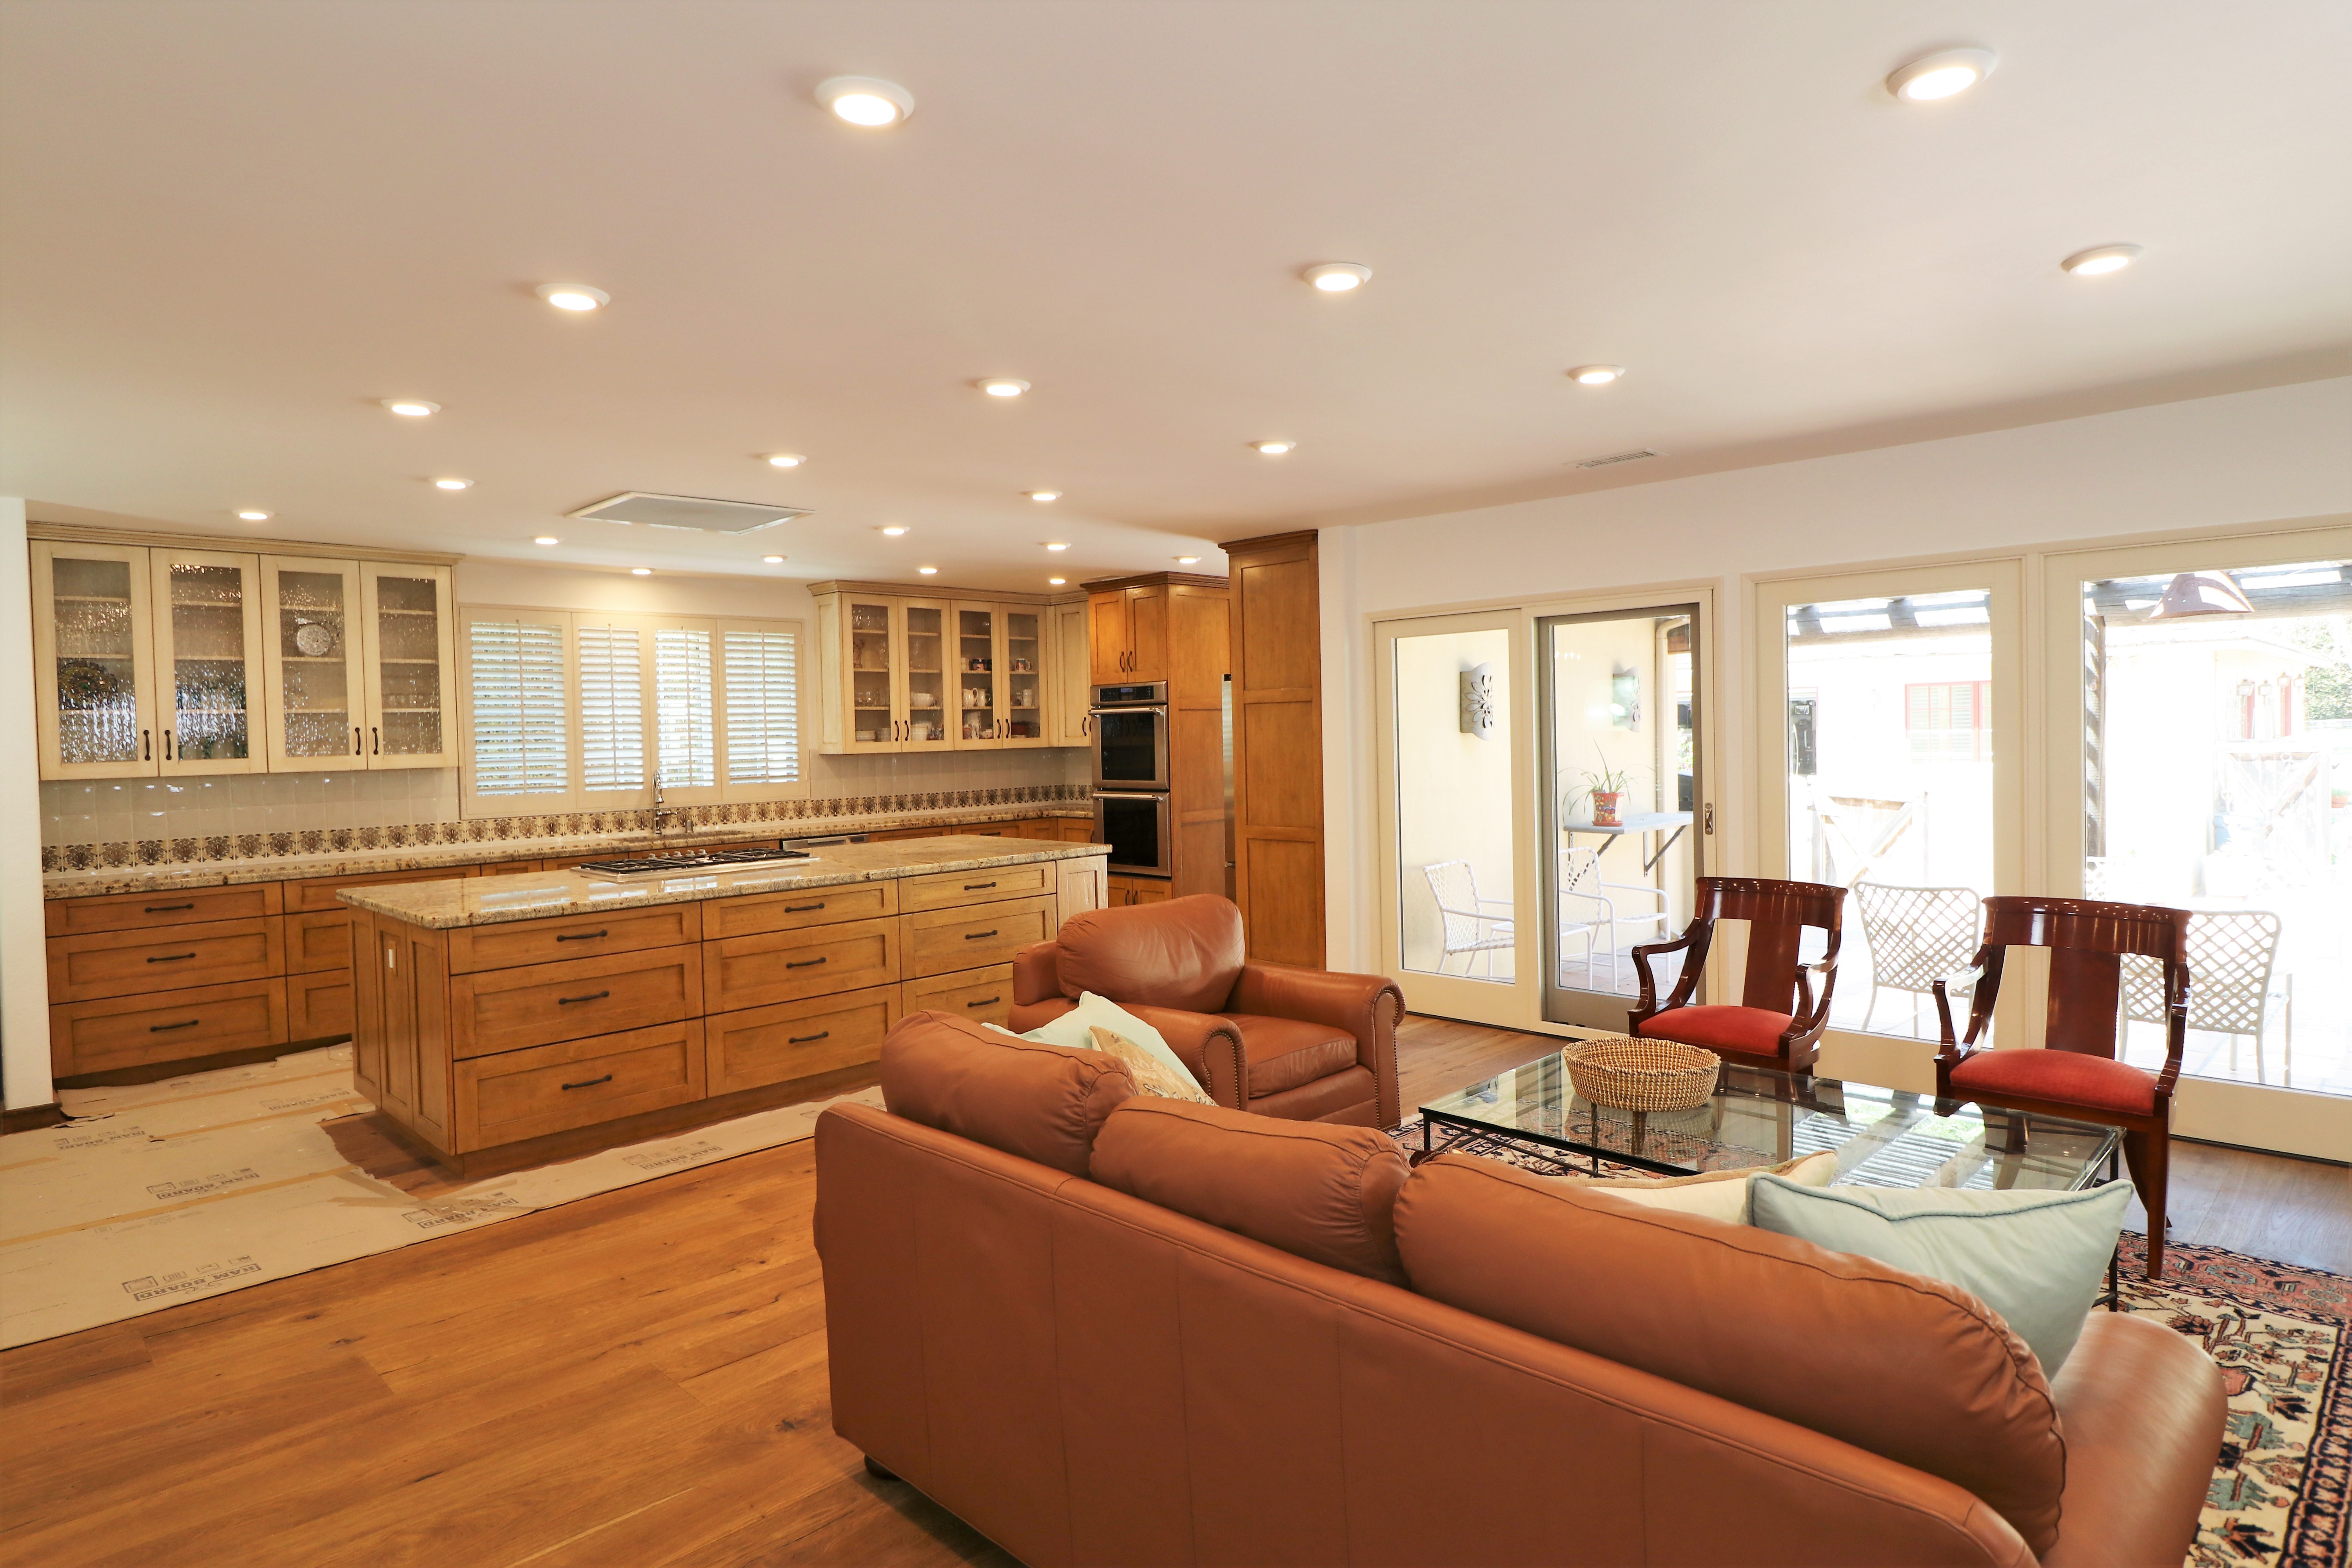 Schumacher Residence: Home Remodel in Sherman Oaks, CA